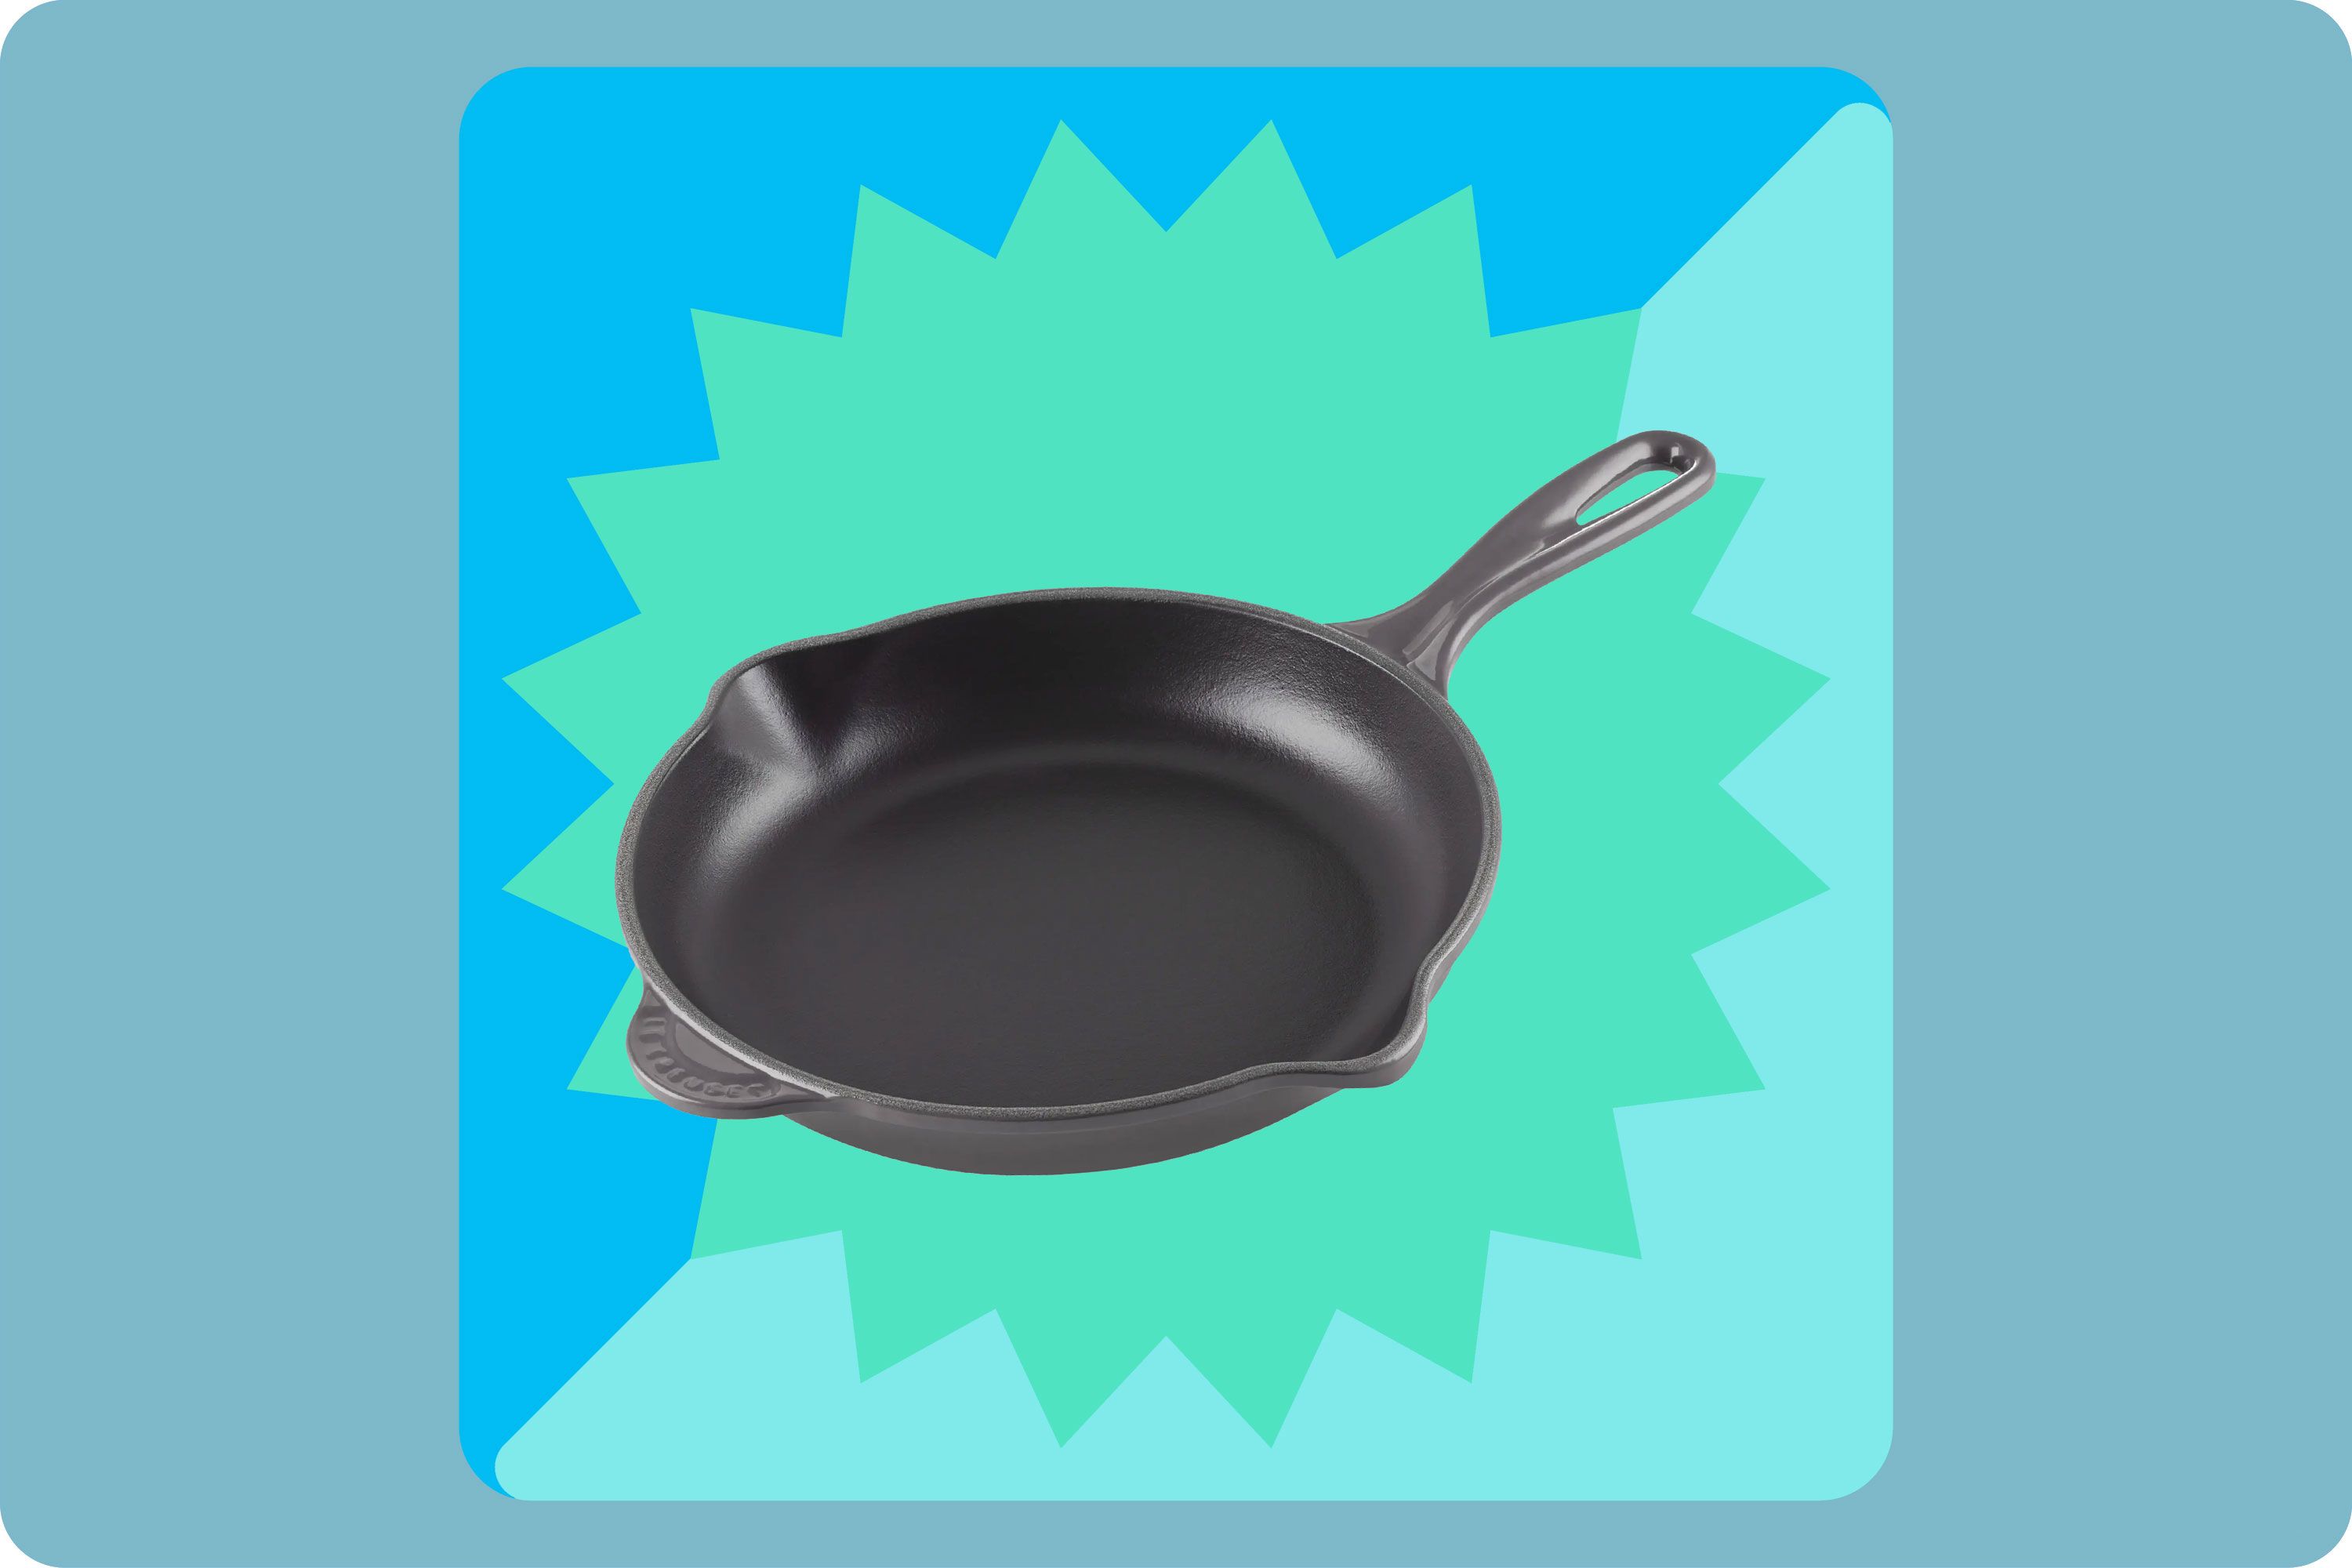 Cook Pro Enameled Cast Iron Non Stick 10.25'' 3 -Piece Frying Pan Set  Frying Pan / Skillet Set